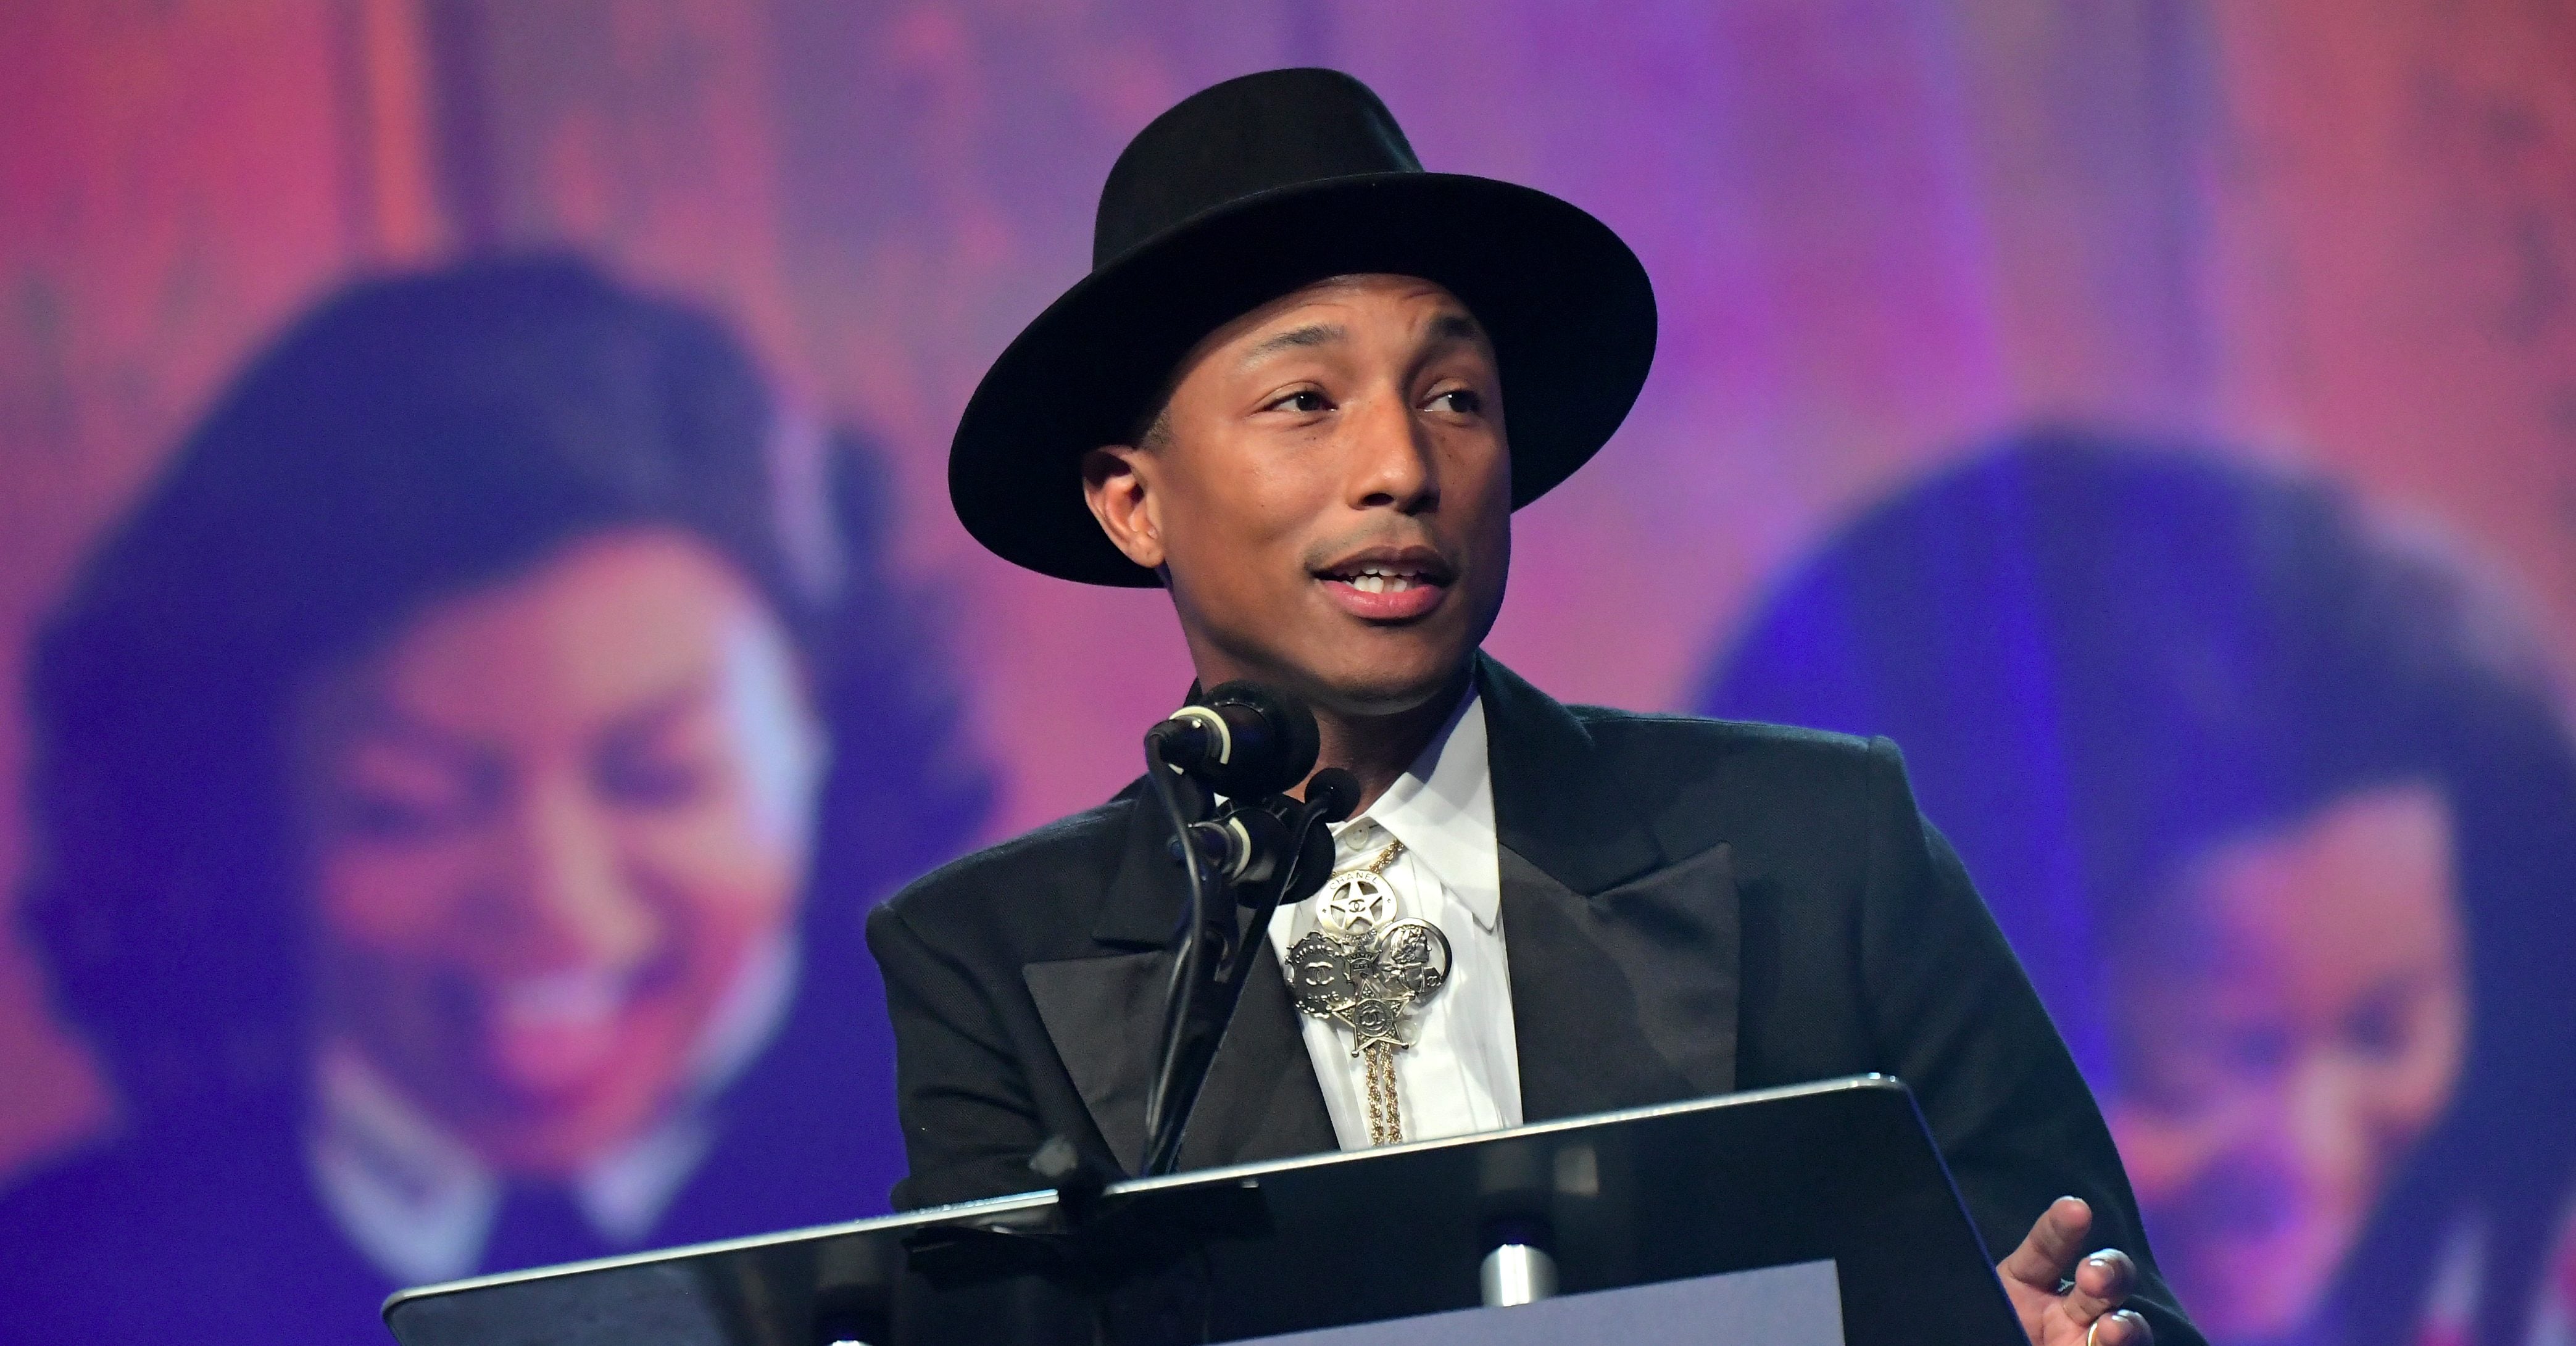 Is Pharrell Williams a Feminist? | POPSUGAR Celebrity